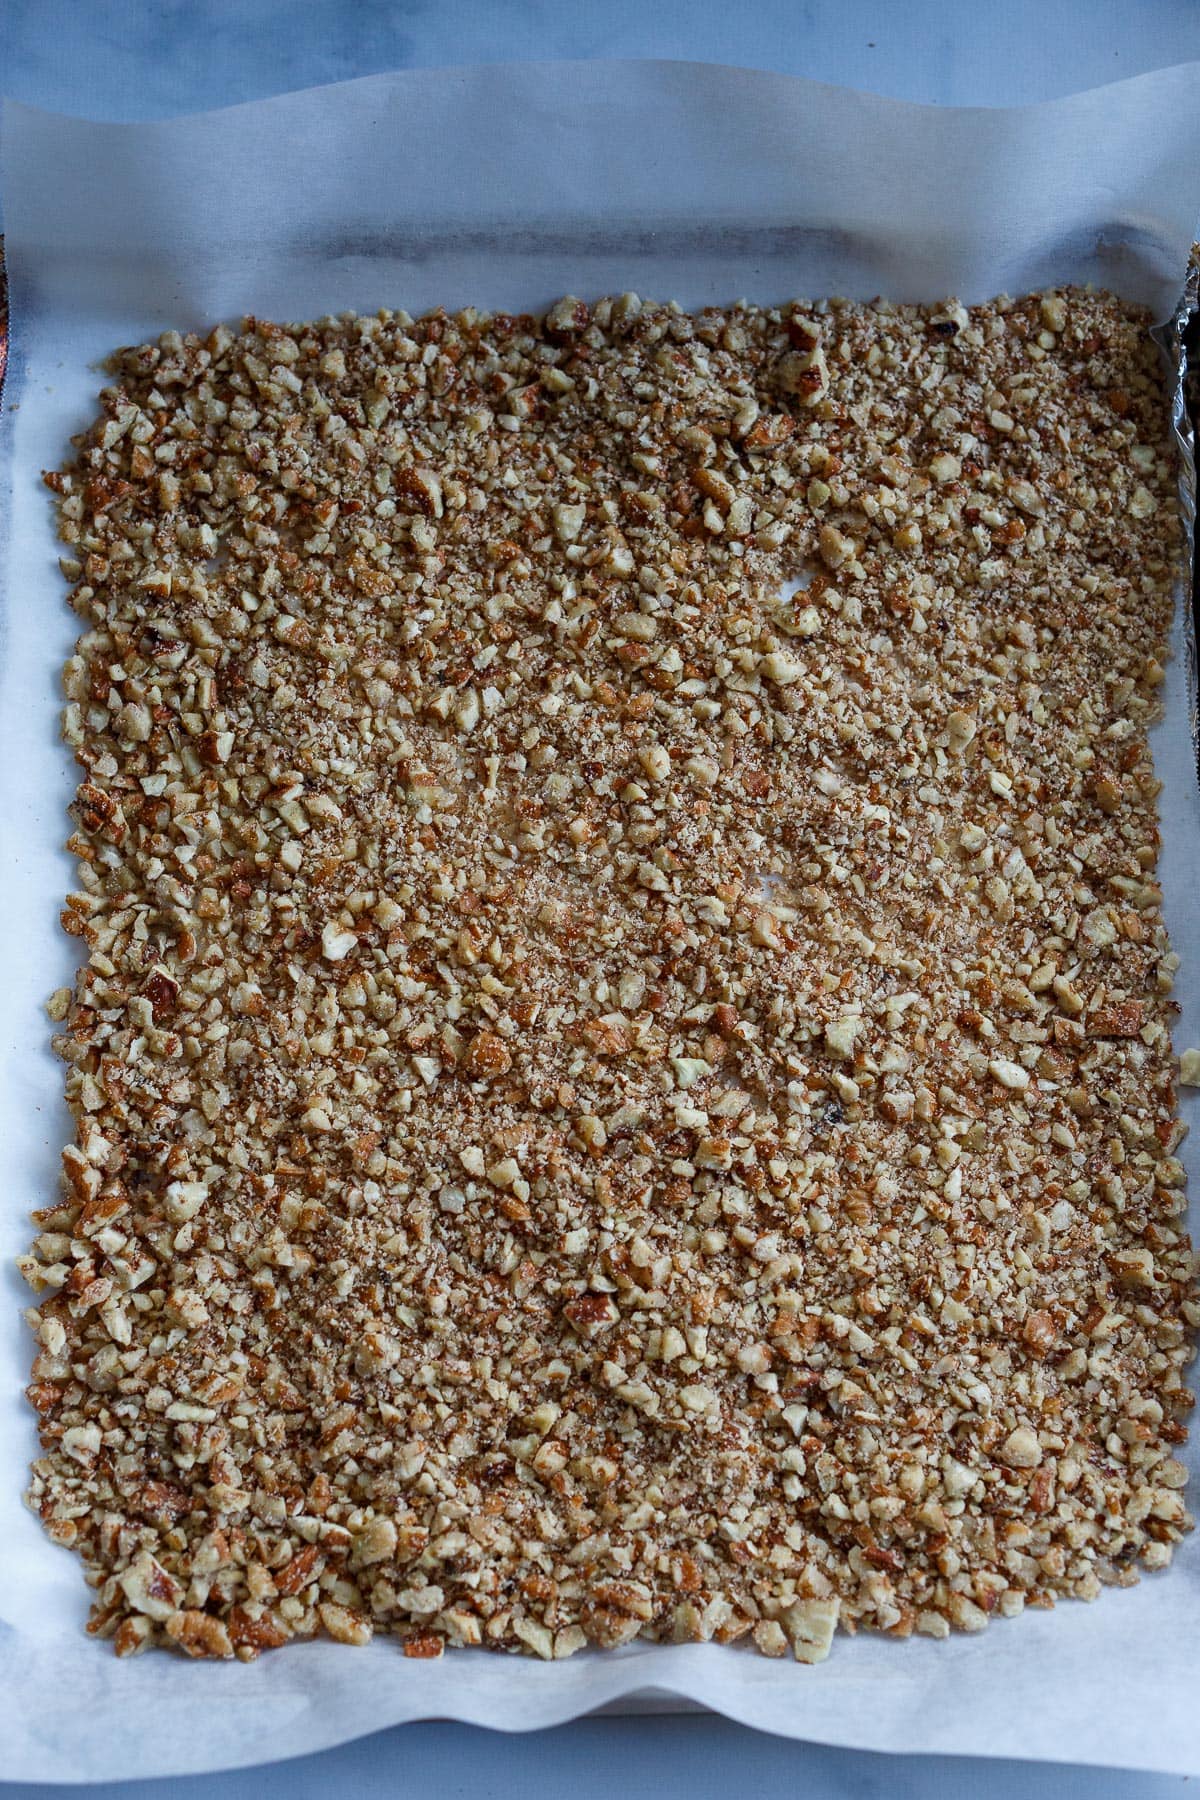 Ground hazelnuts toasting on a sheet pan.